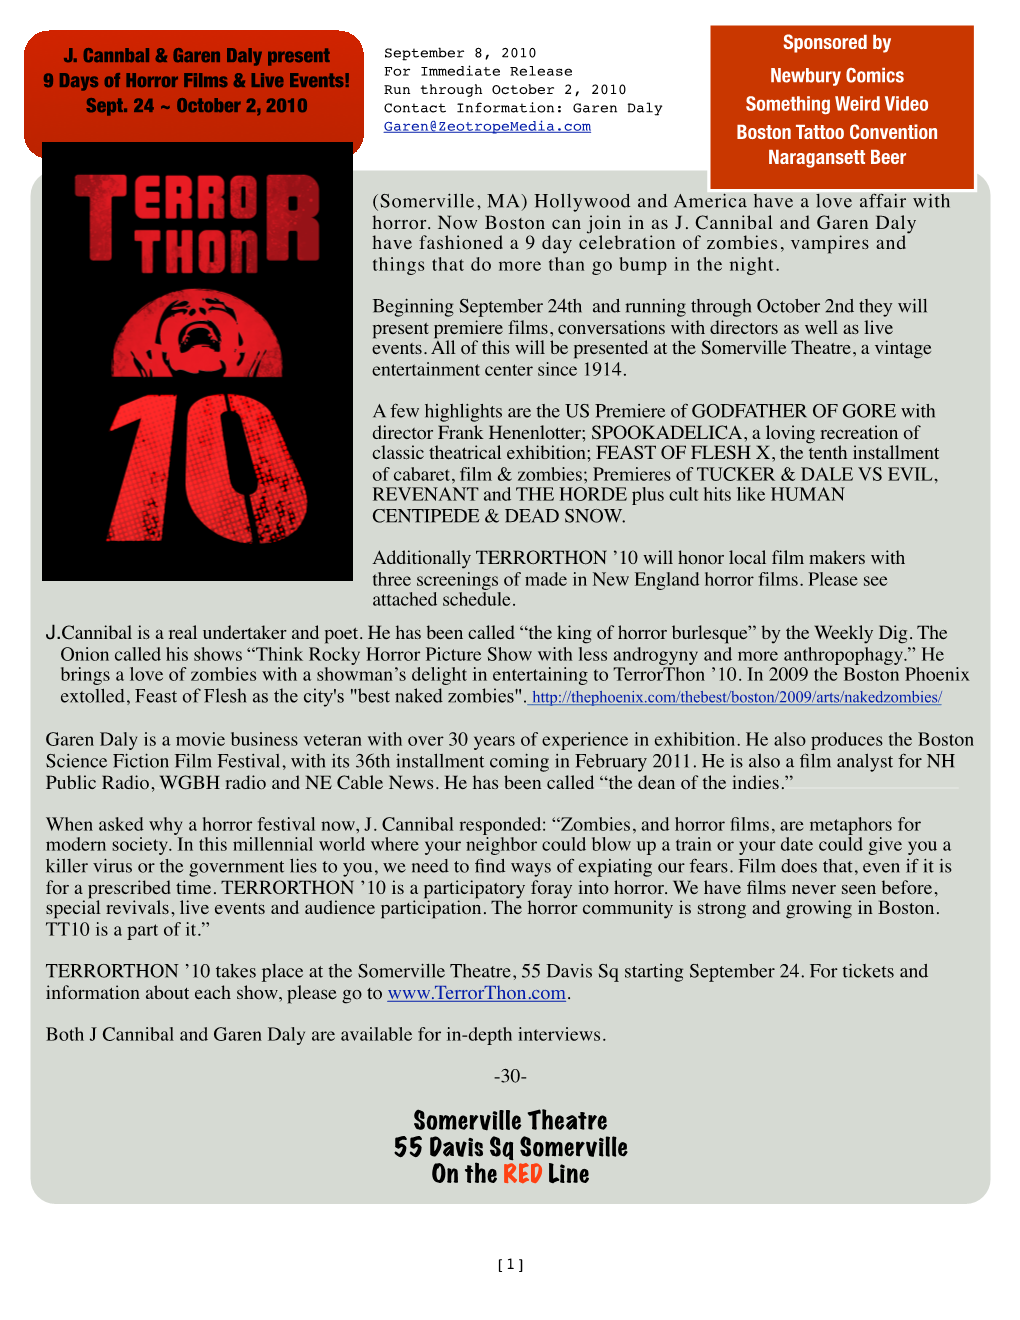 Terrorthon PR